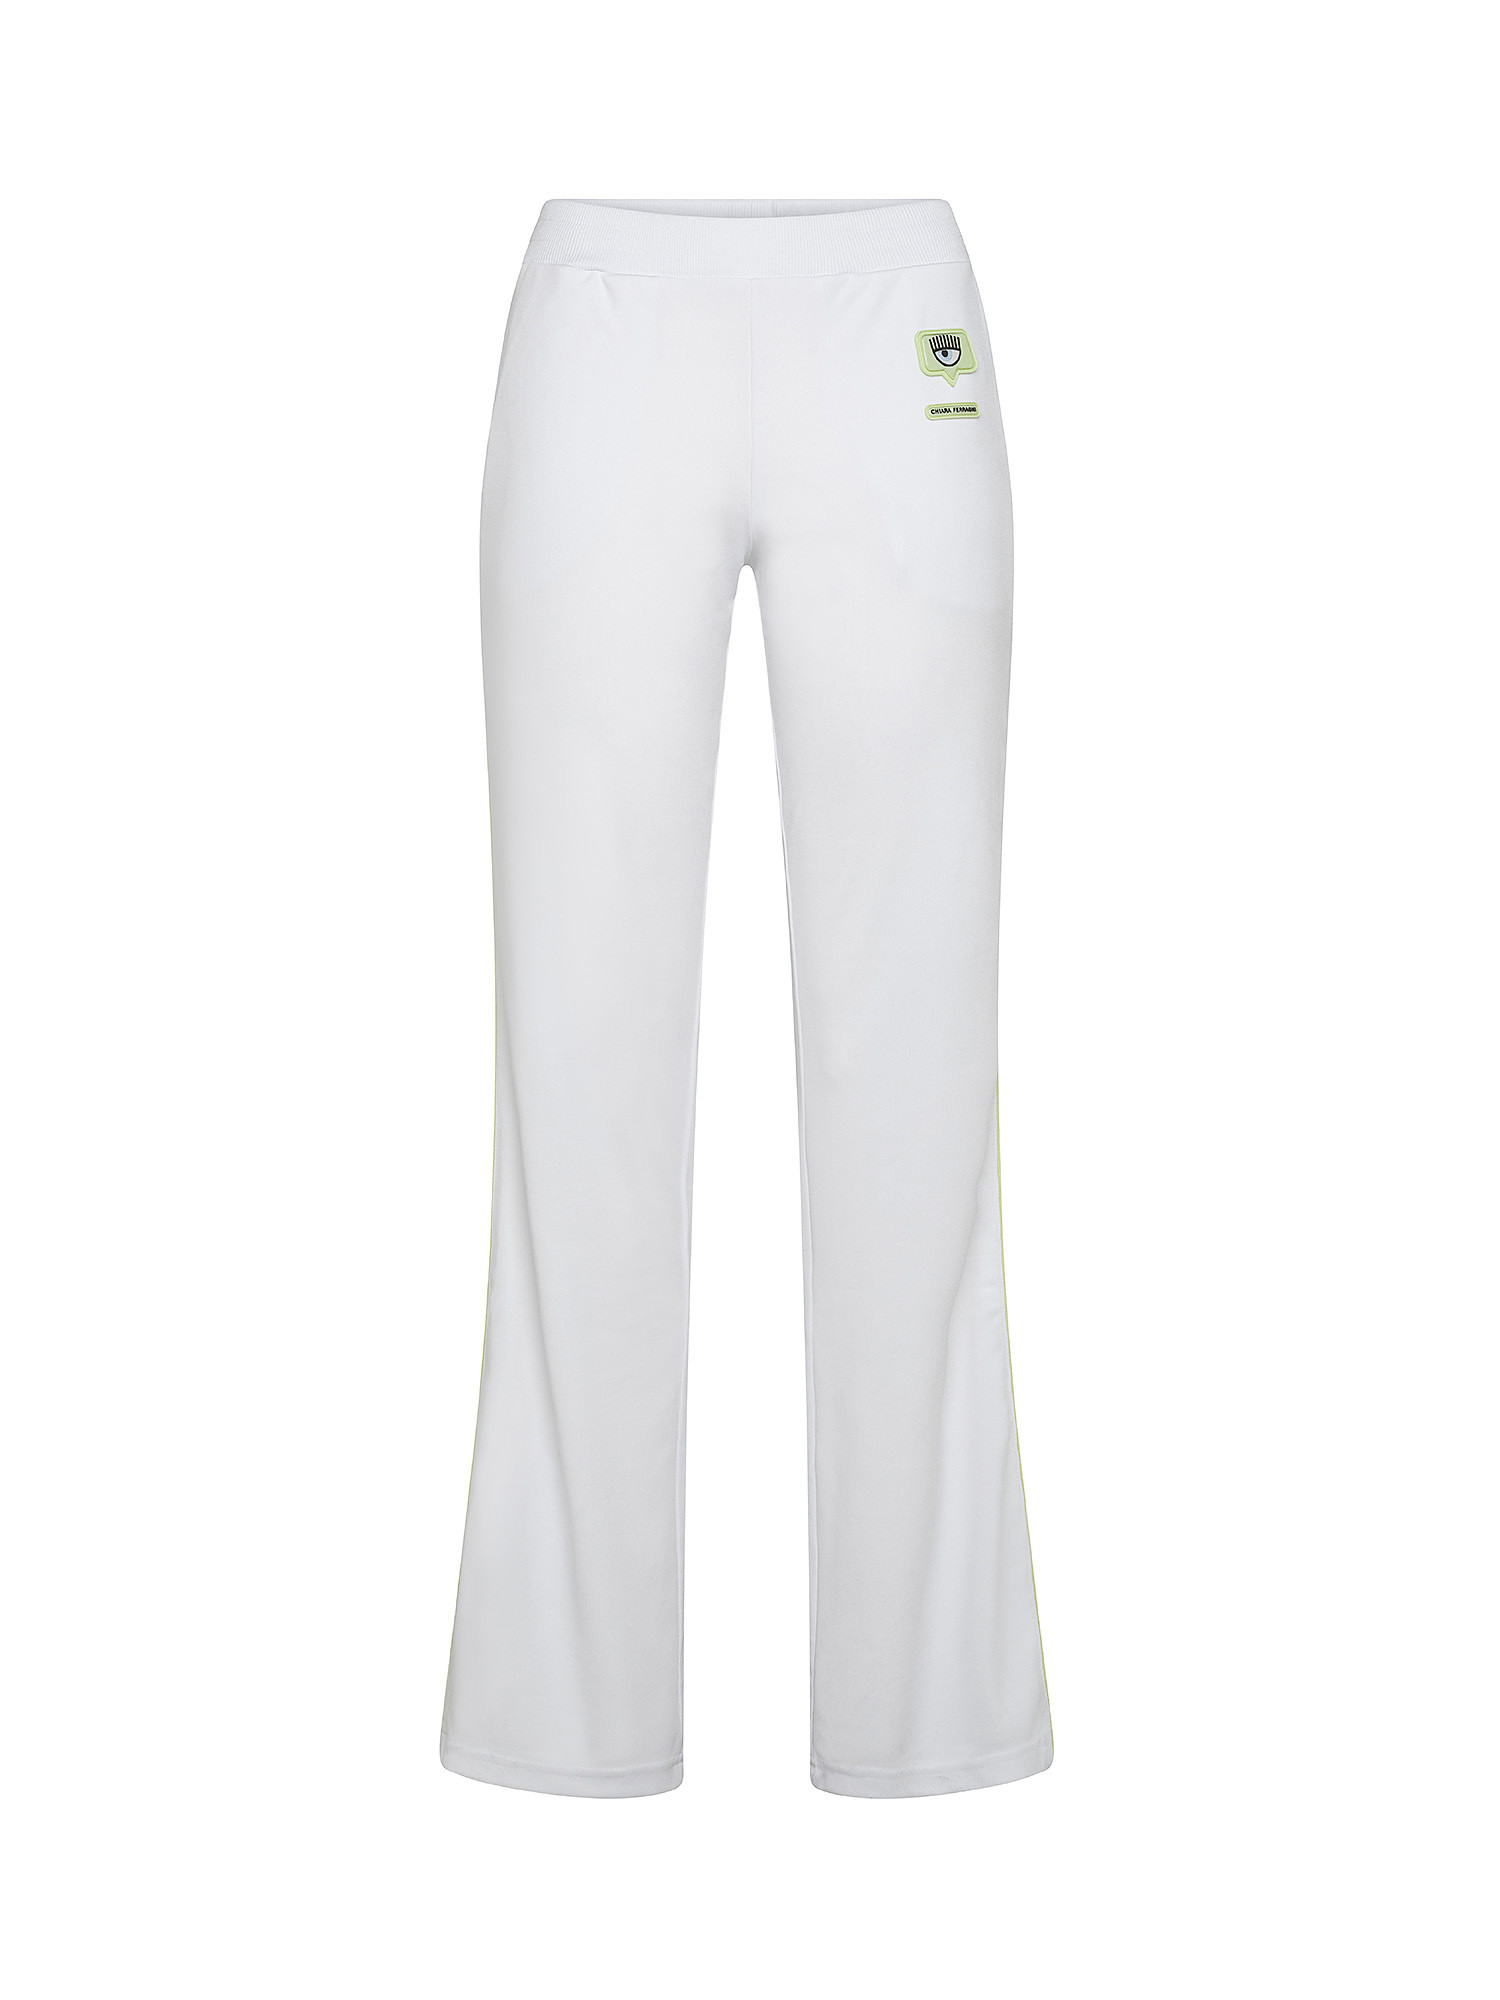 Pantaloni, Bianco, large image number 0